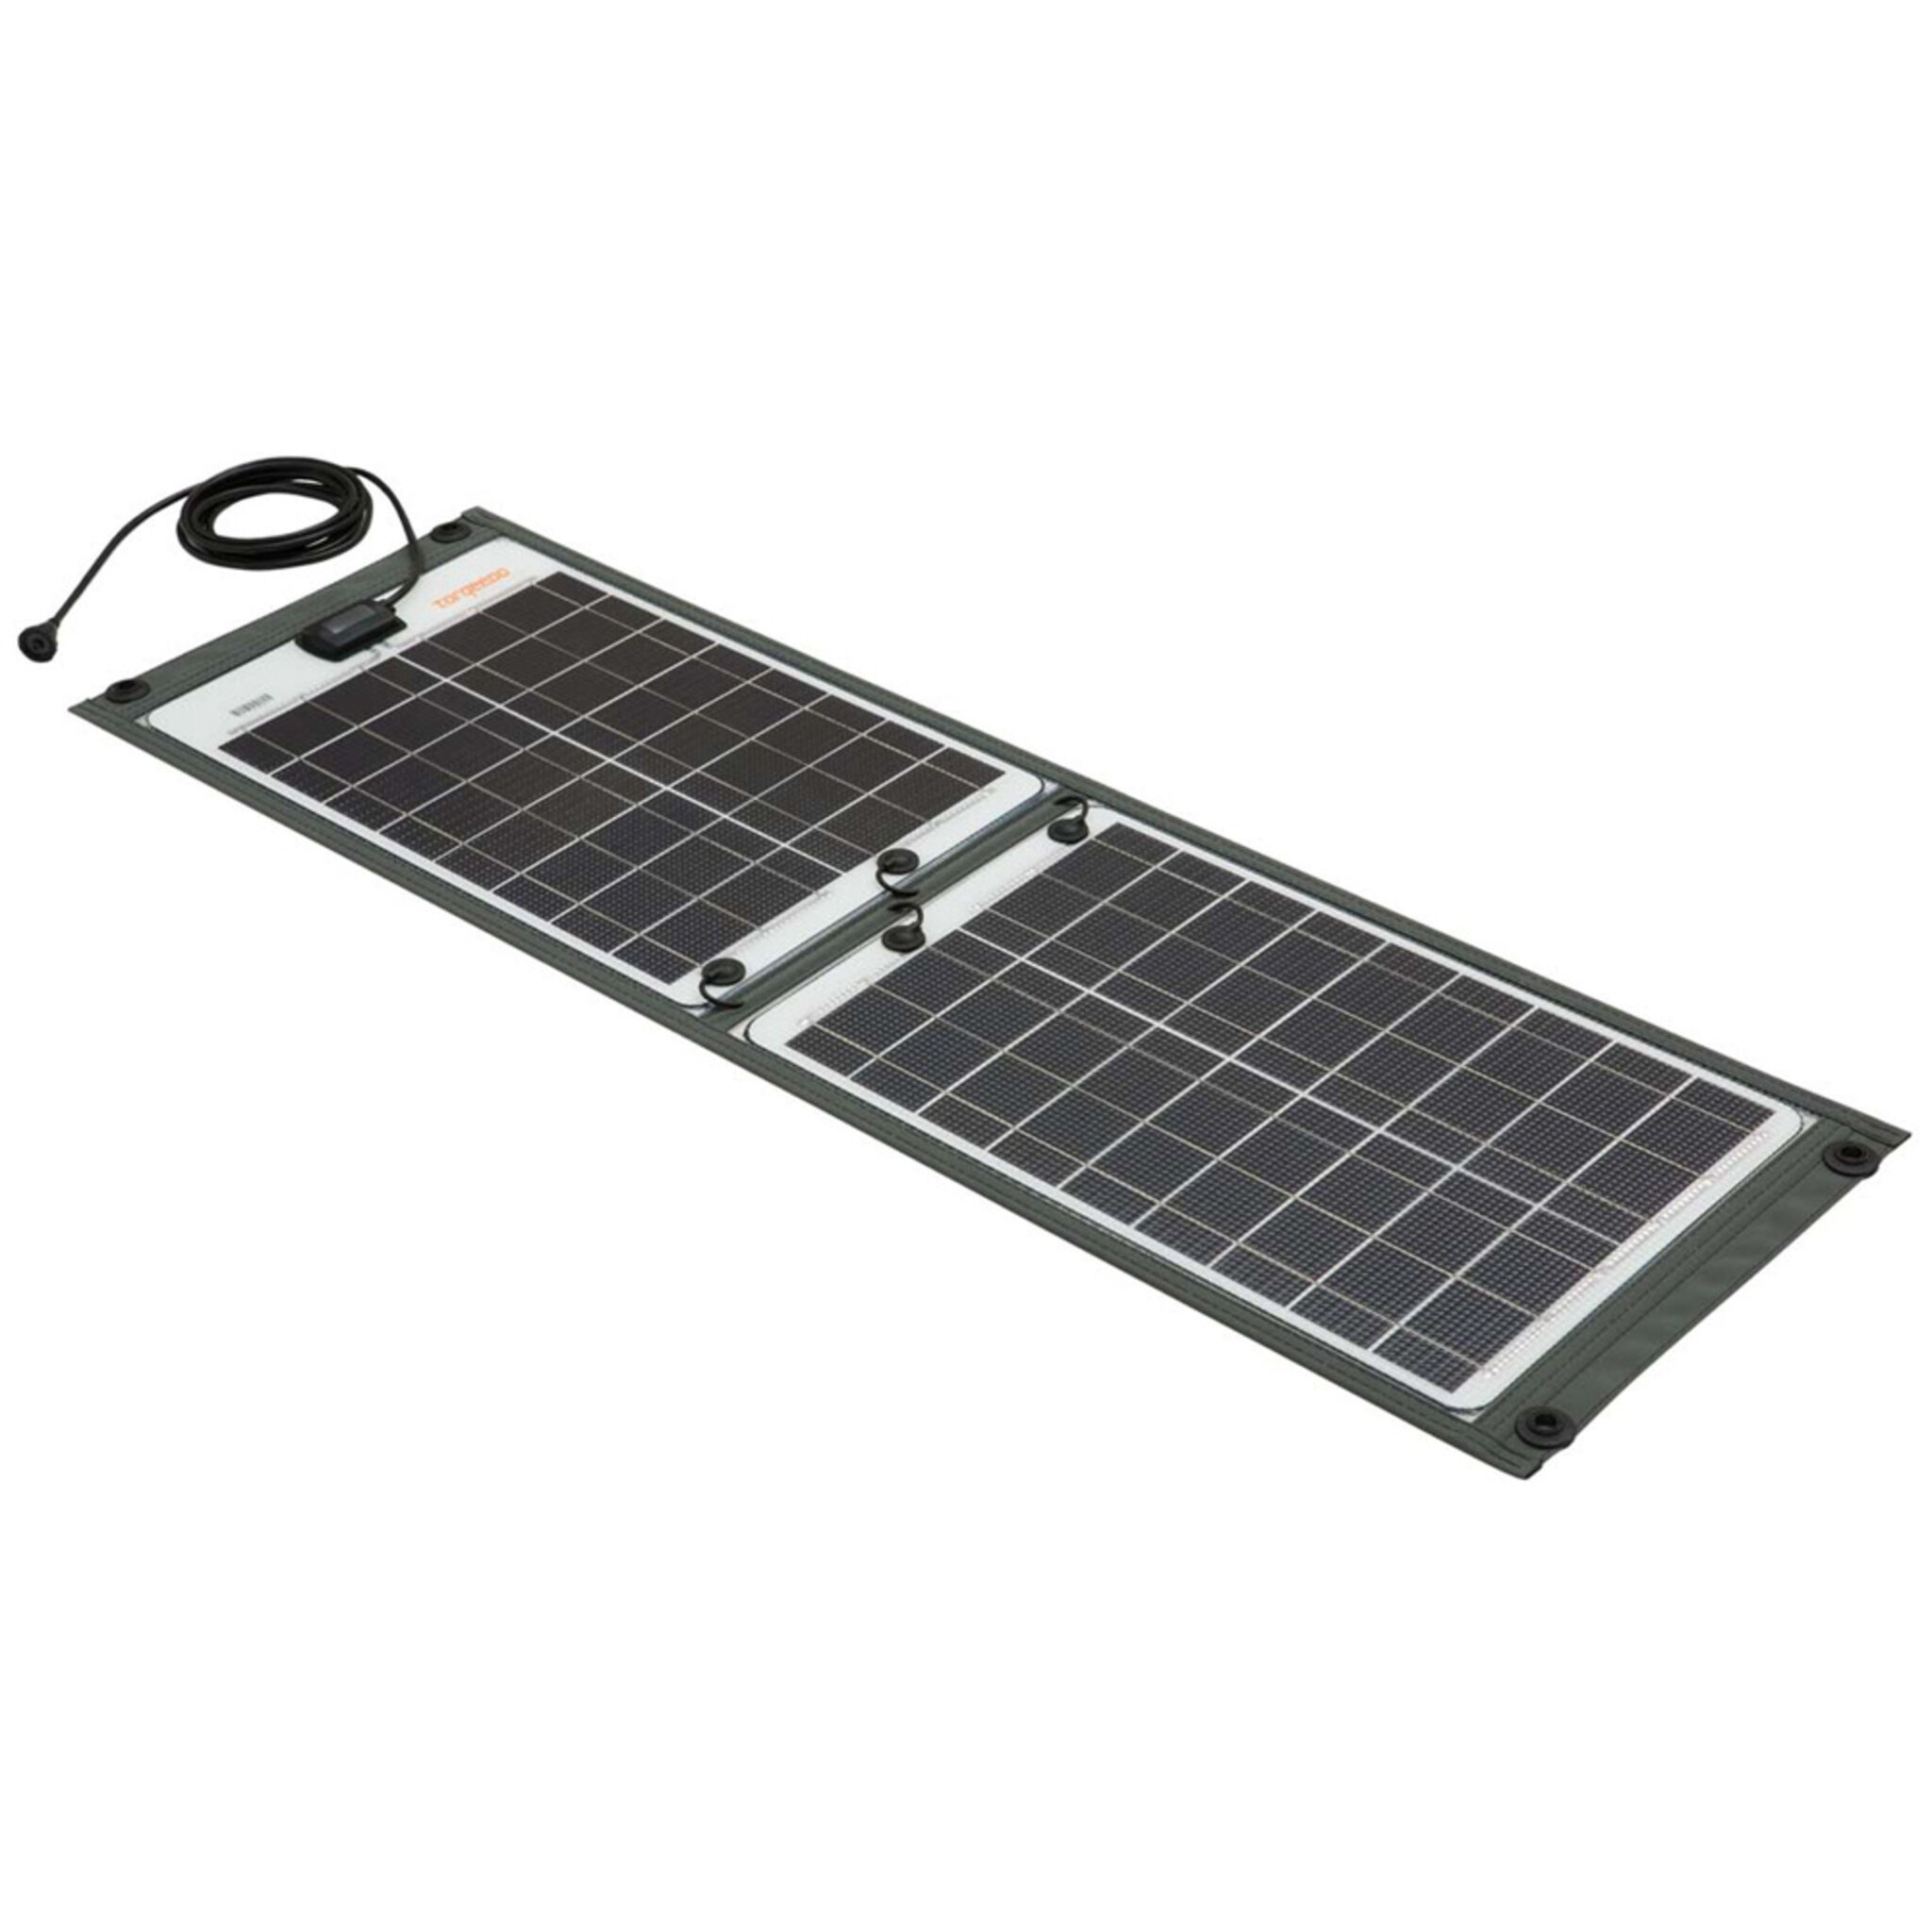 Torqeedo solar charger Sunfold 50